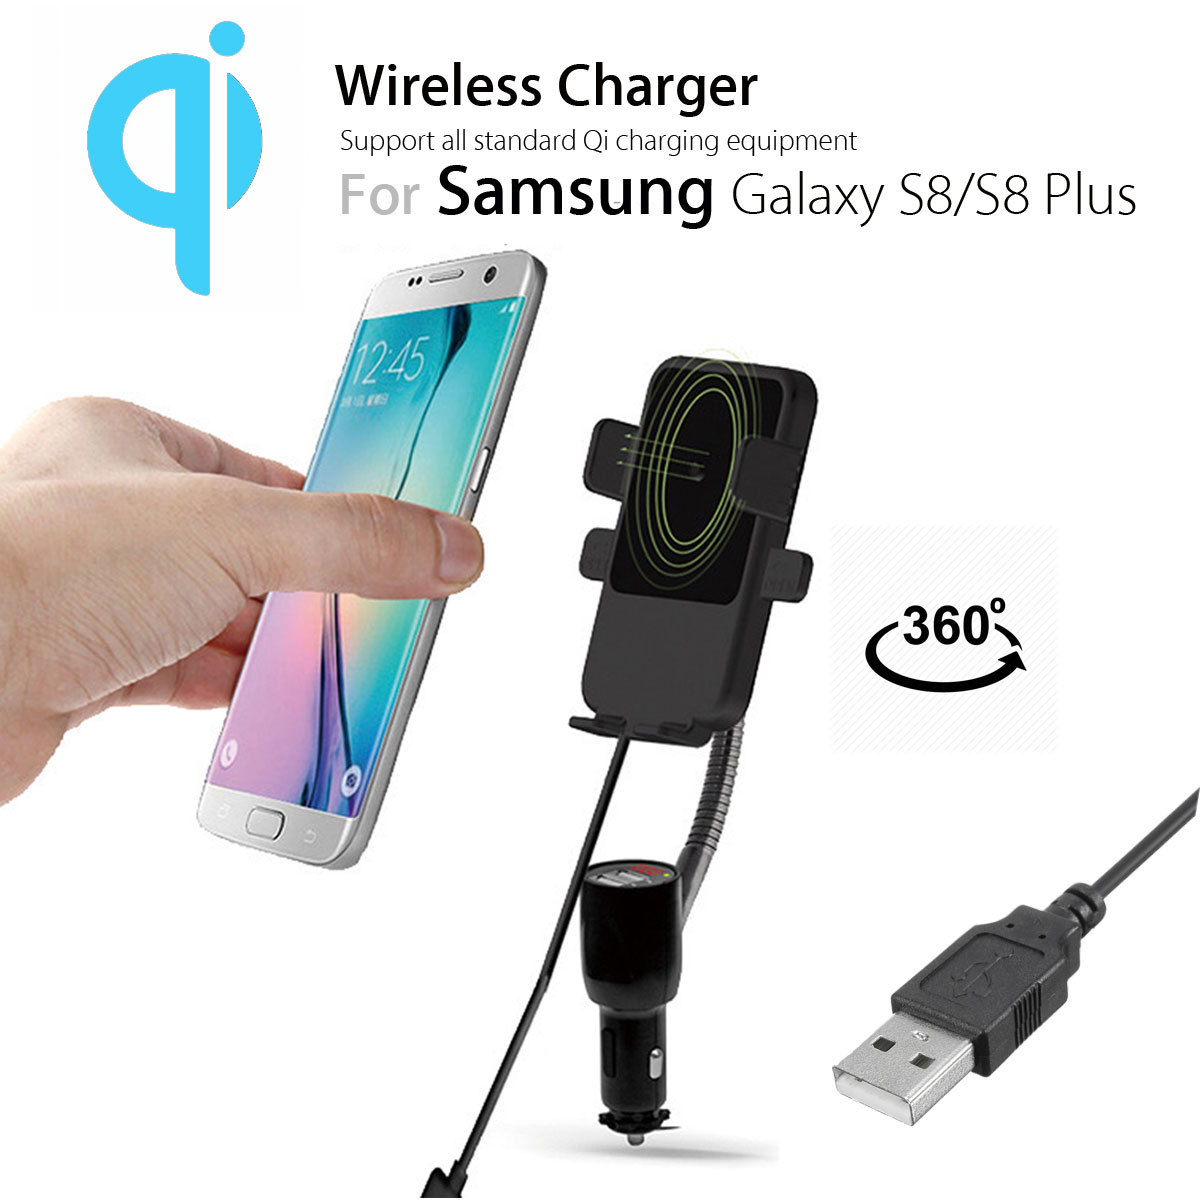 Qi-Wireless-Charger-Dual-USB-Car-Cig-arette-Lighter-Holder-For-i-Phone-Sam-sungder-1157842